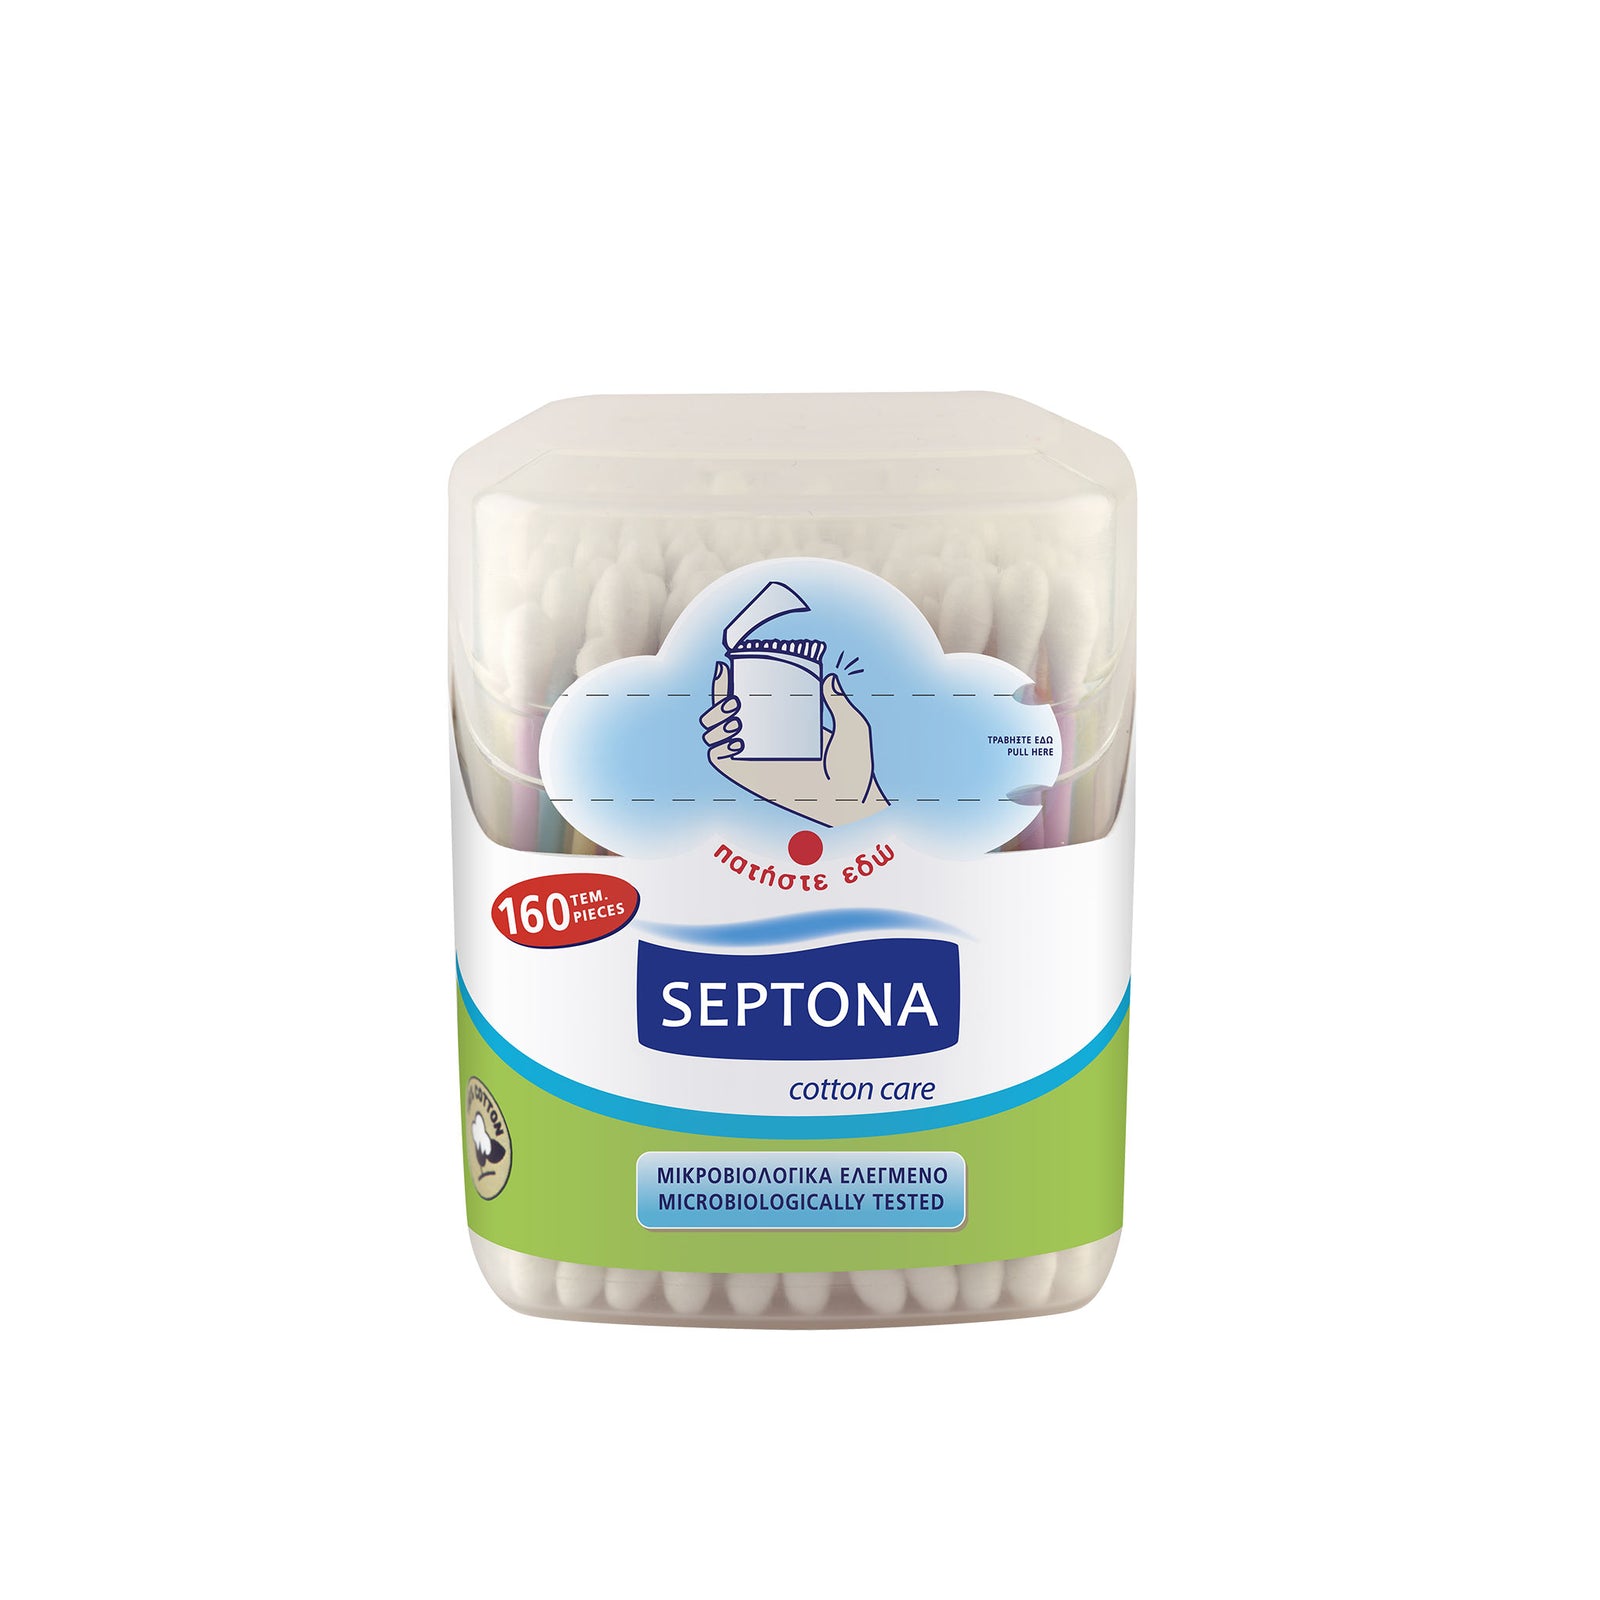 Septona Cotton Care 160 Cotton Buds in Plastic pop-up jar